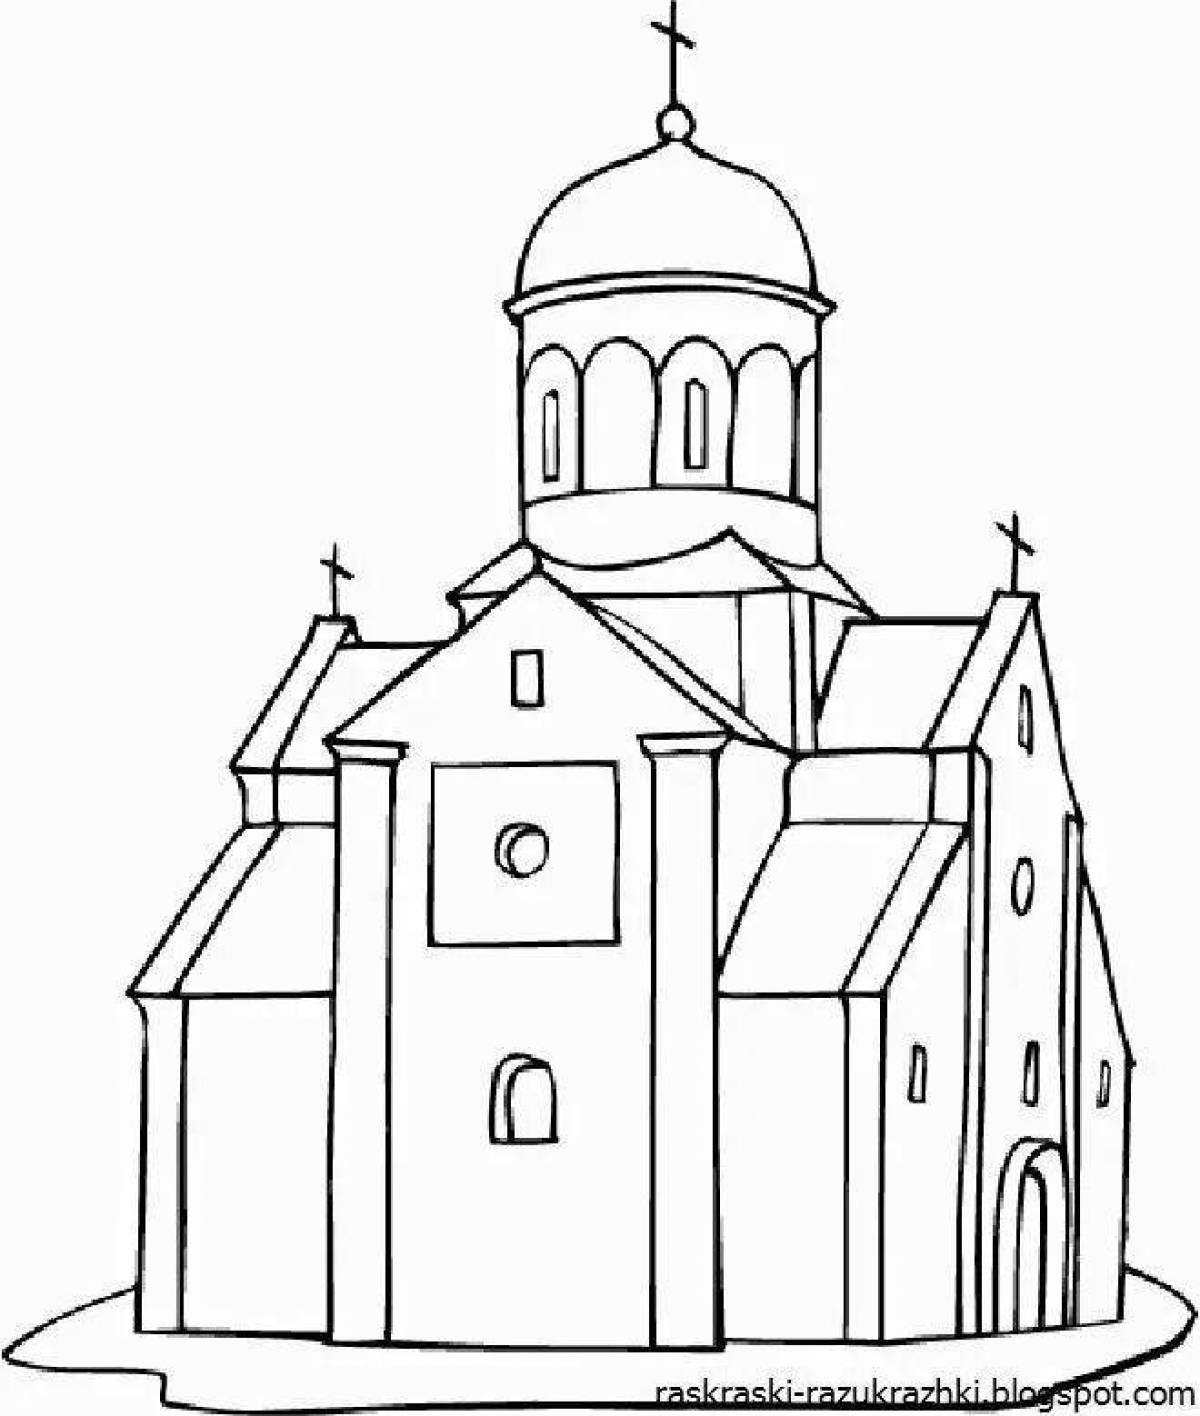 Joyful church drawing